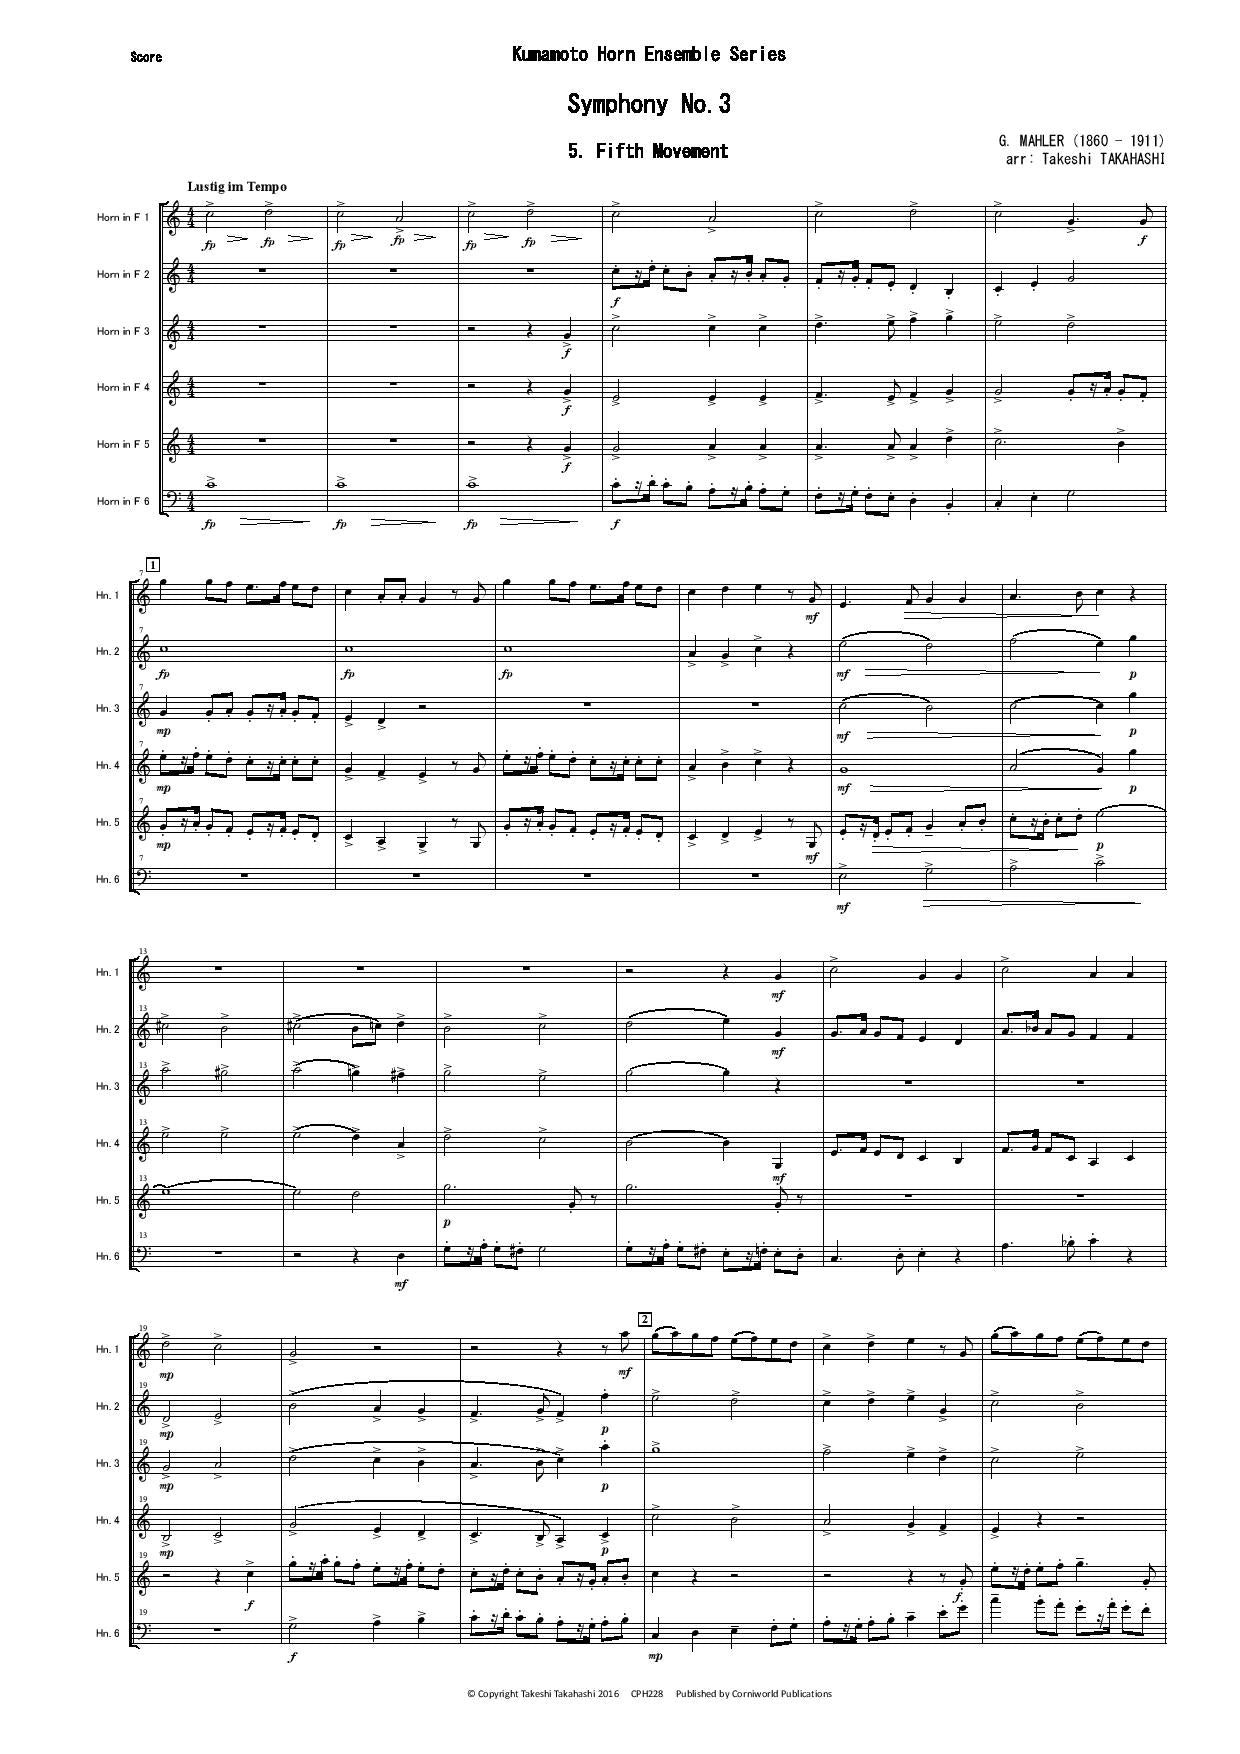 5th Mvt from Symphony No.3 (Mahler) CPH228